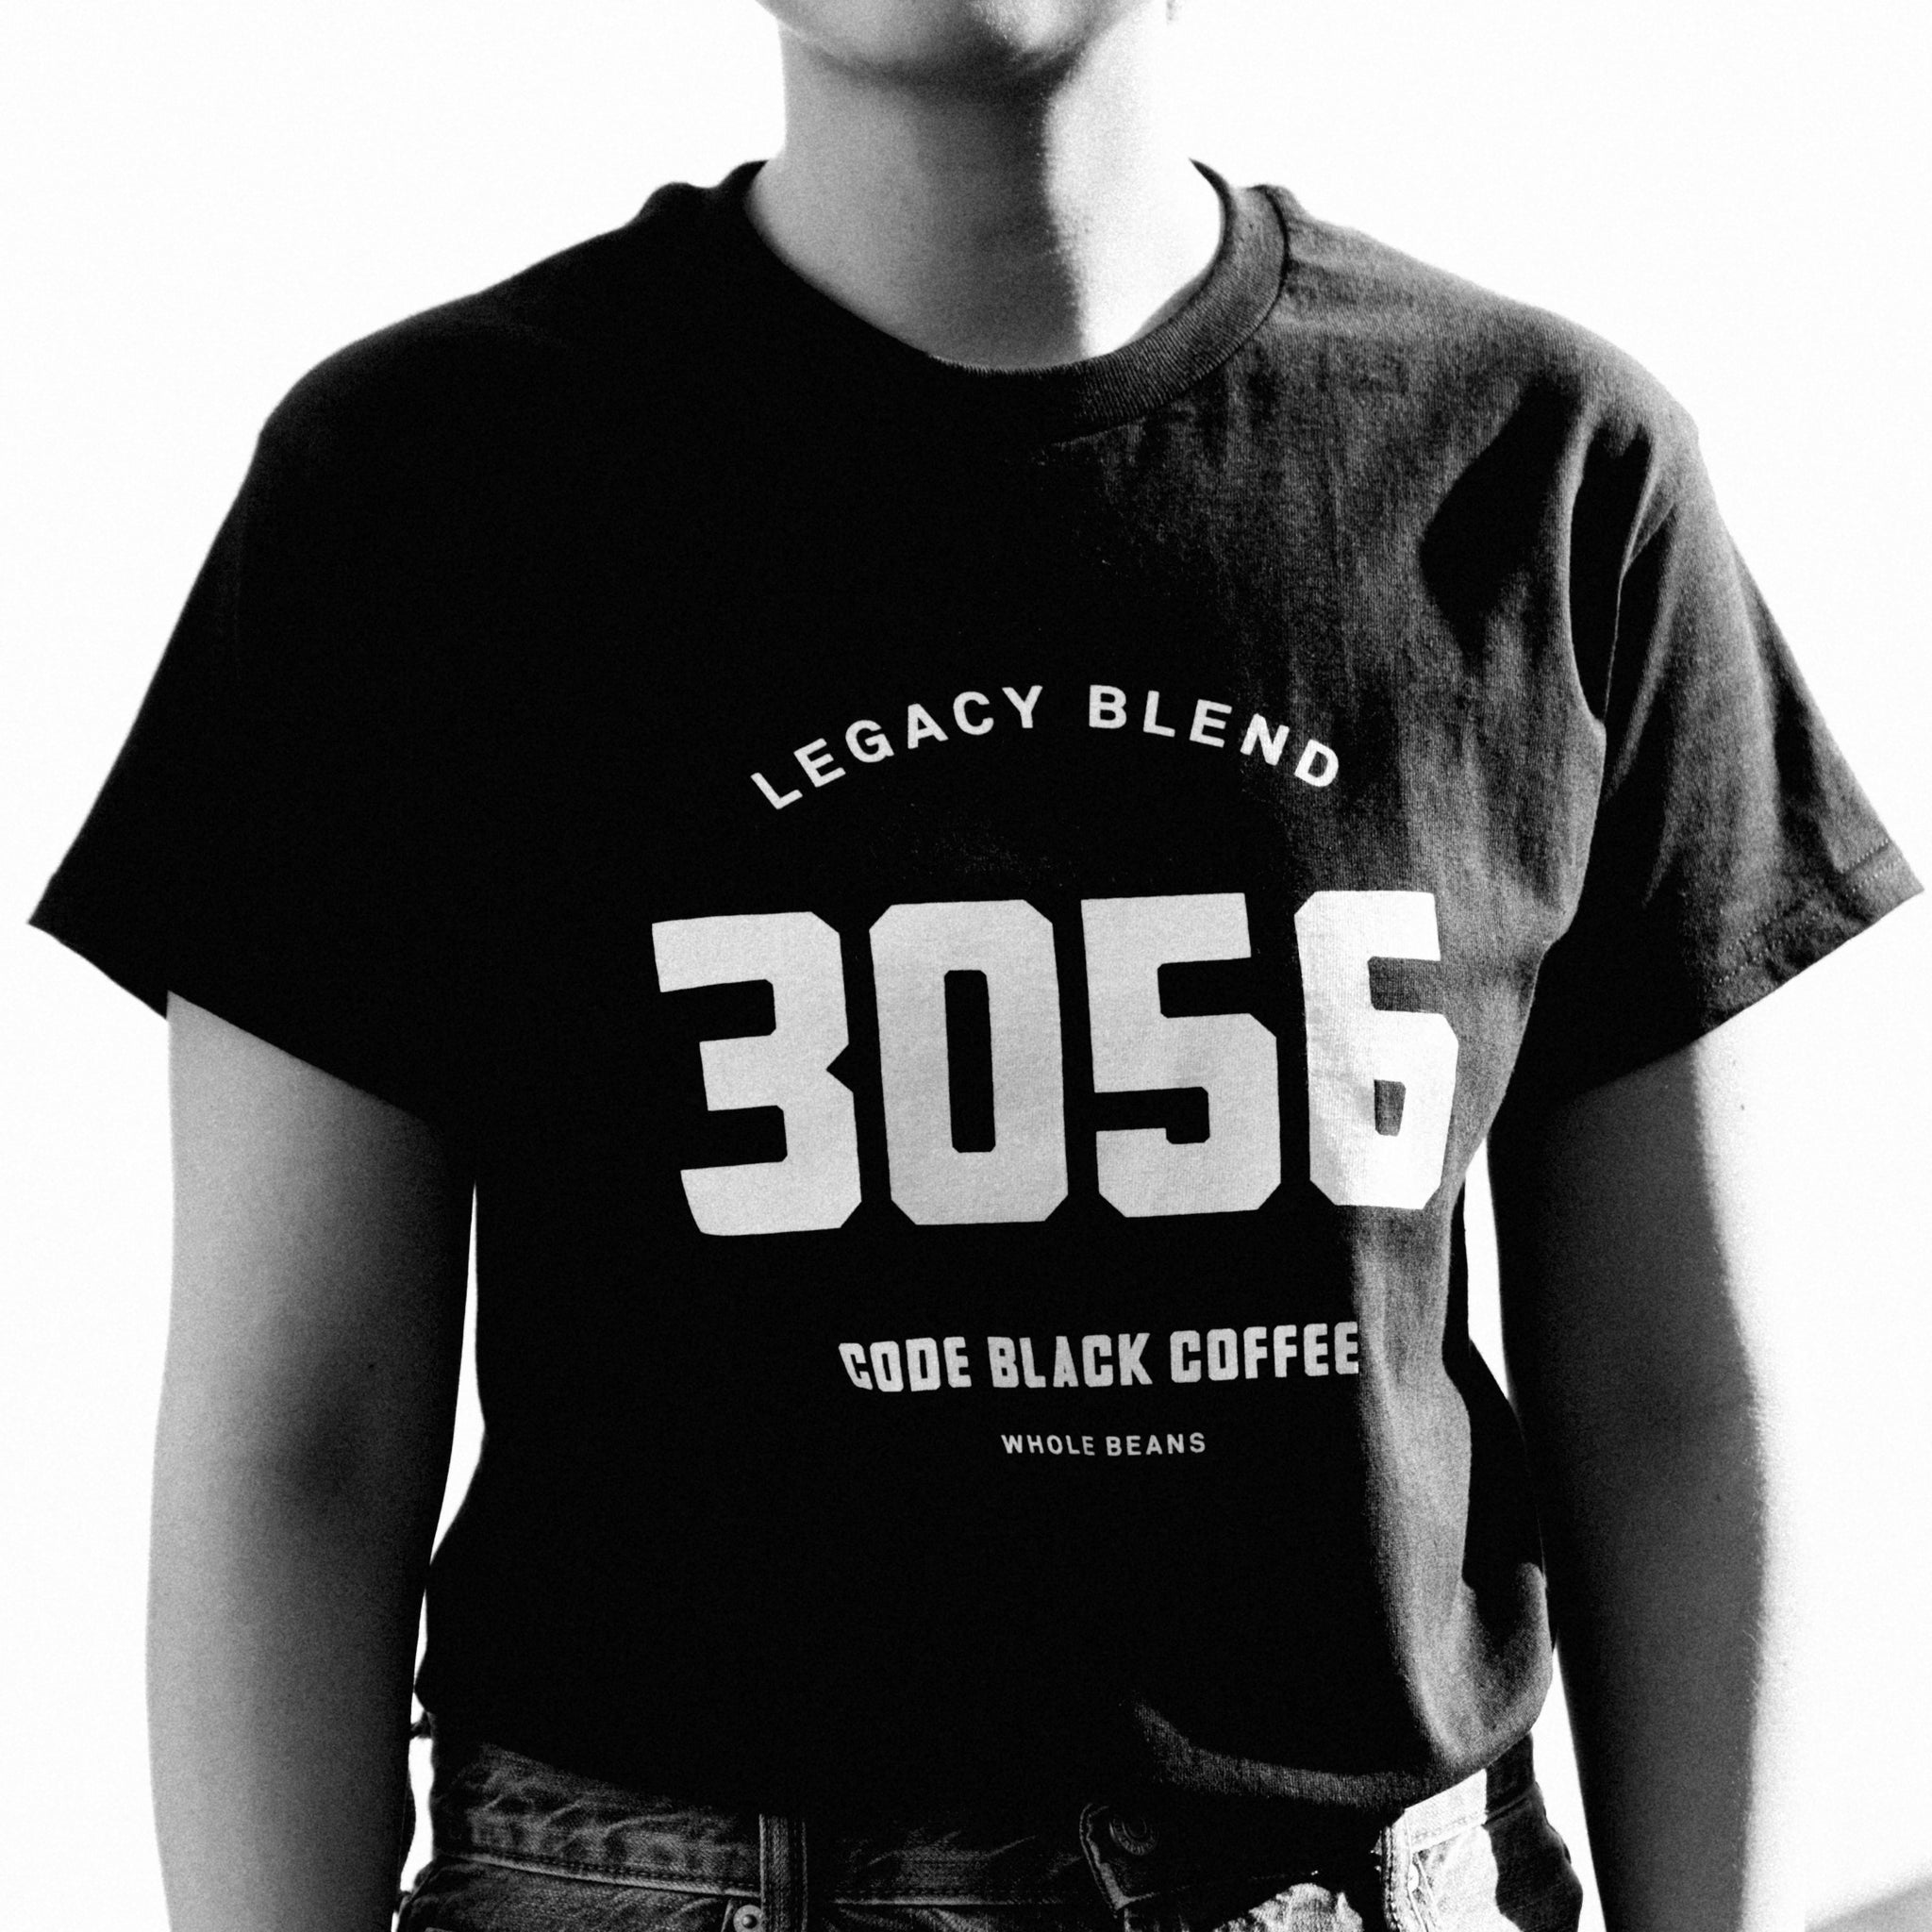 Neck Black Crew \'3056\' T-Shirt Coffee Code